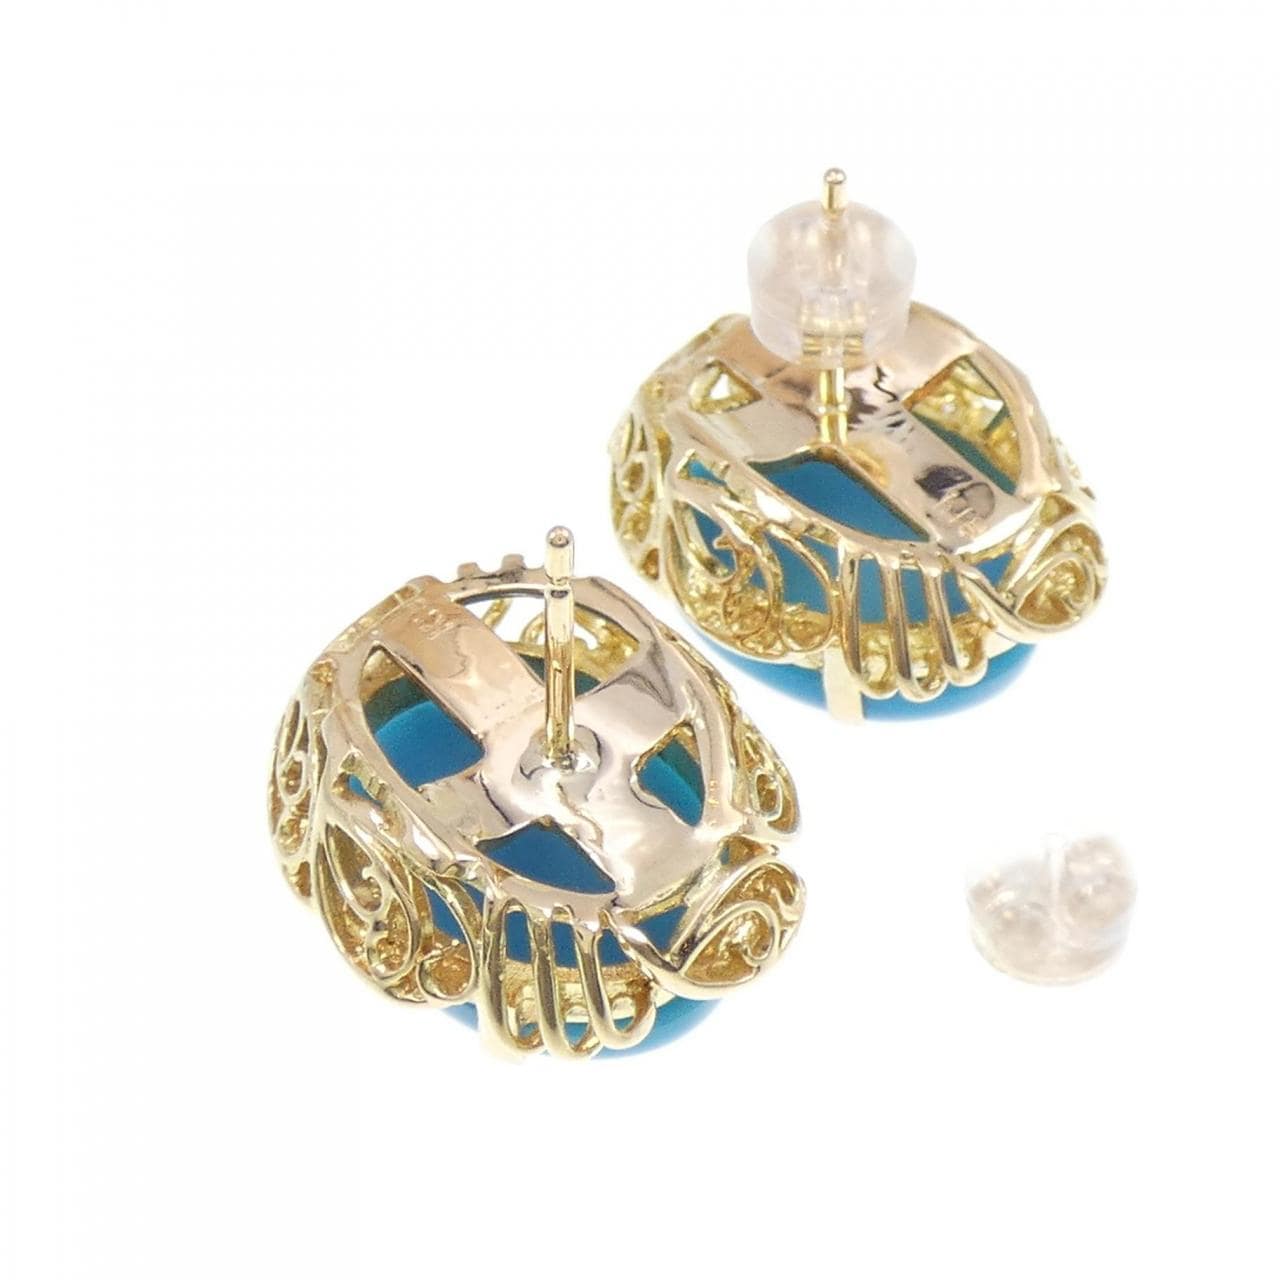 K18YG turquoise earrings